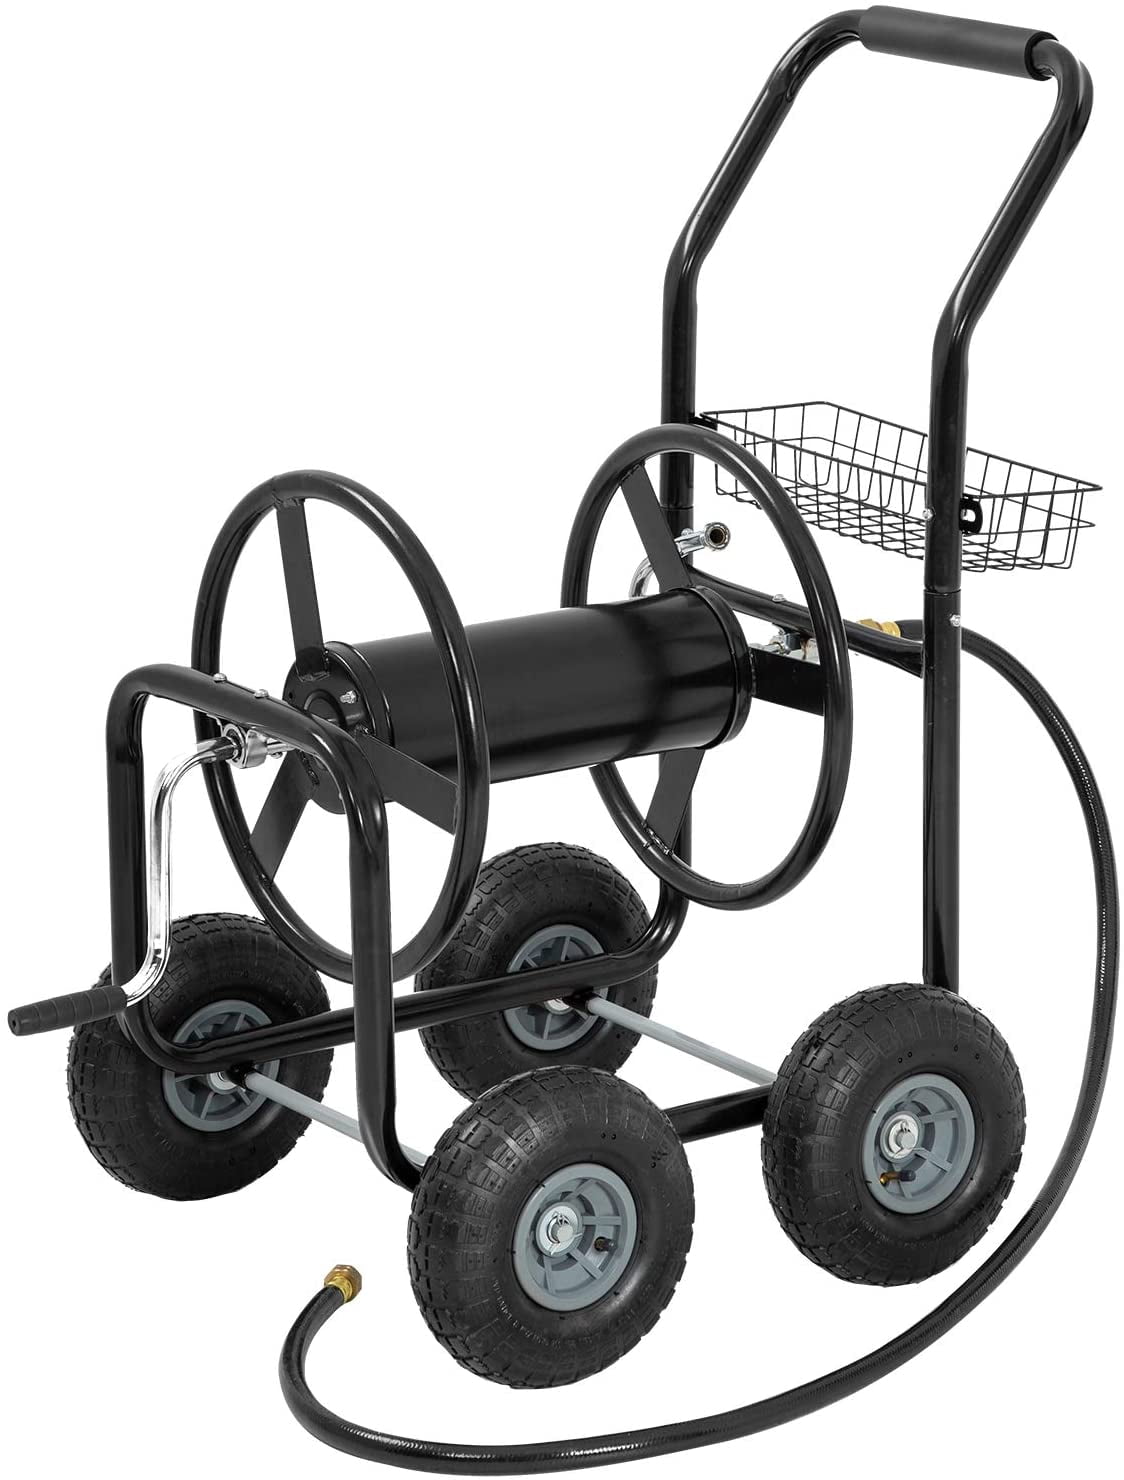 go2buy Heavy Duty Garden Hose Reel Cart with Wheels 300ft Water Hose Holder & Storage Basket 